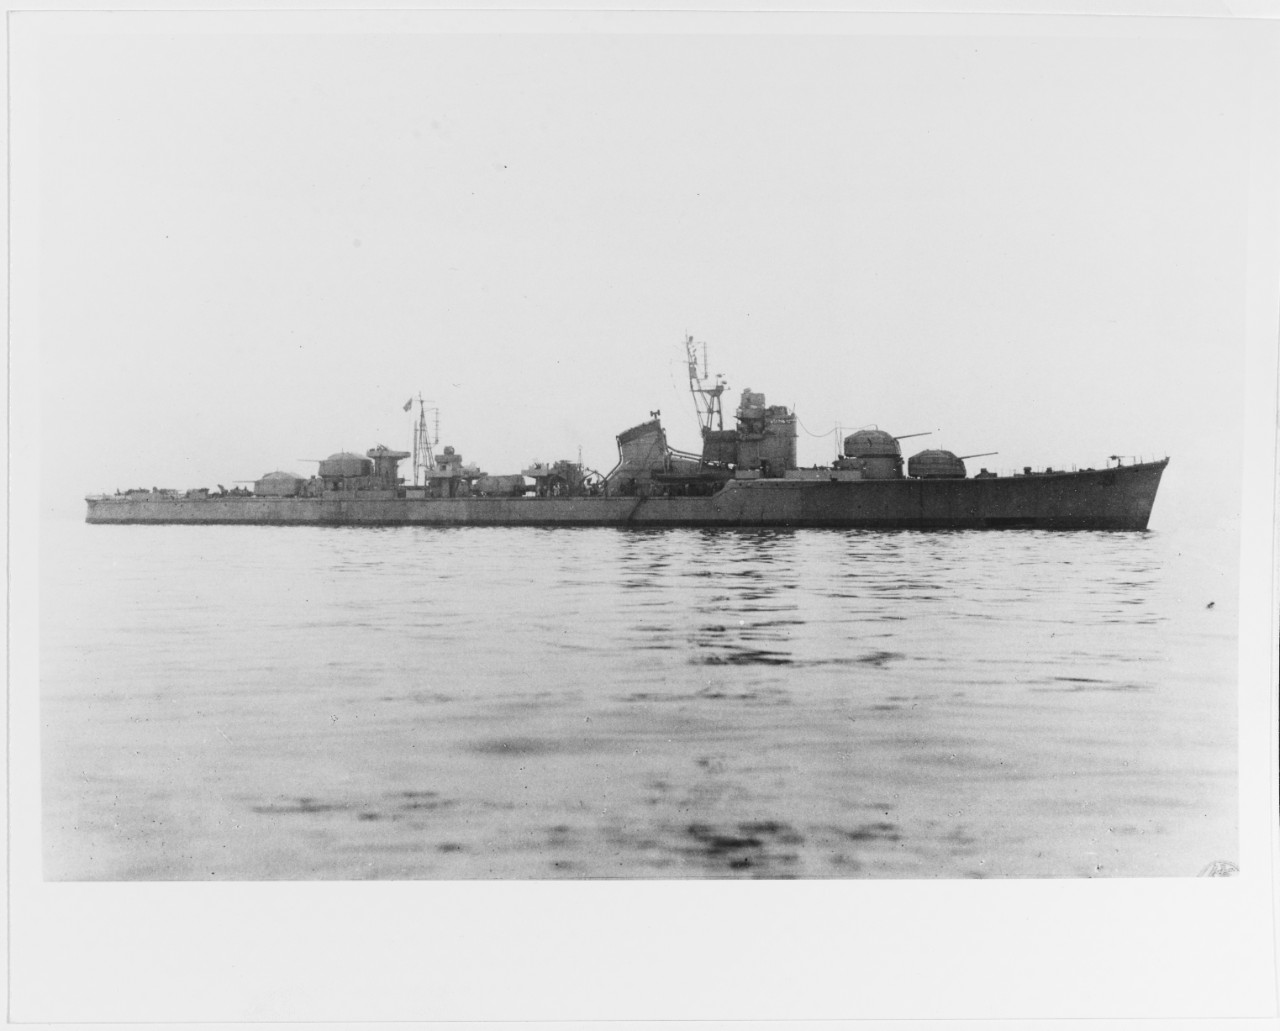 KATSURAGI (Japanese aircraft carrier, 1944-1965)